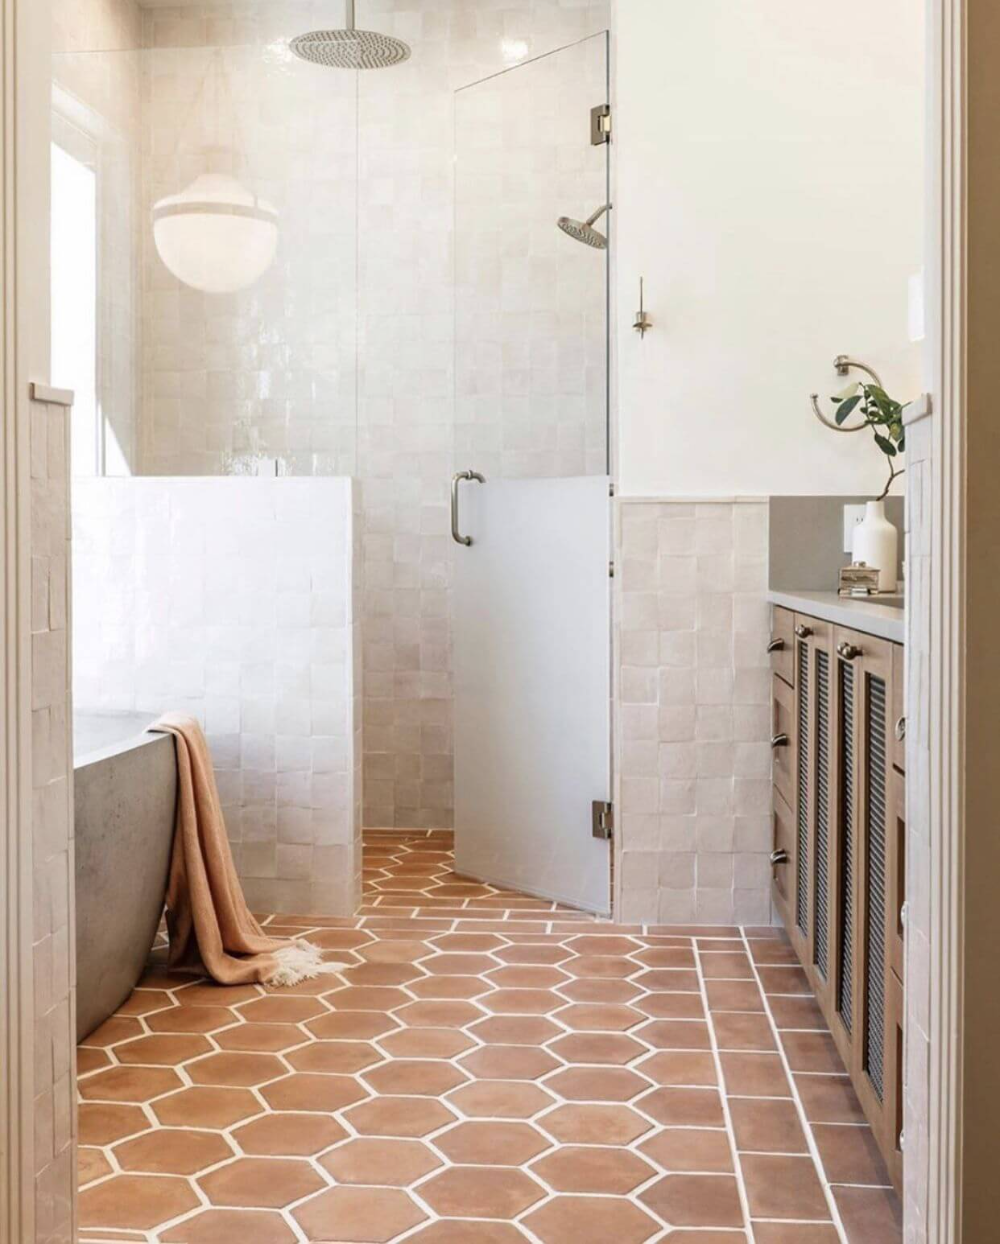 Installing your own bathroom floor tile